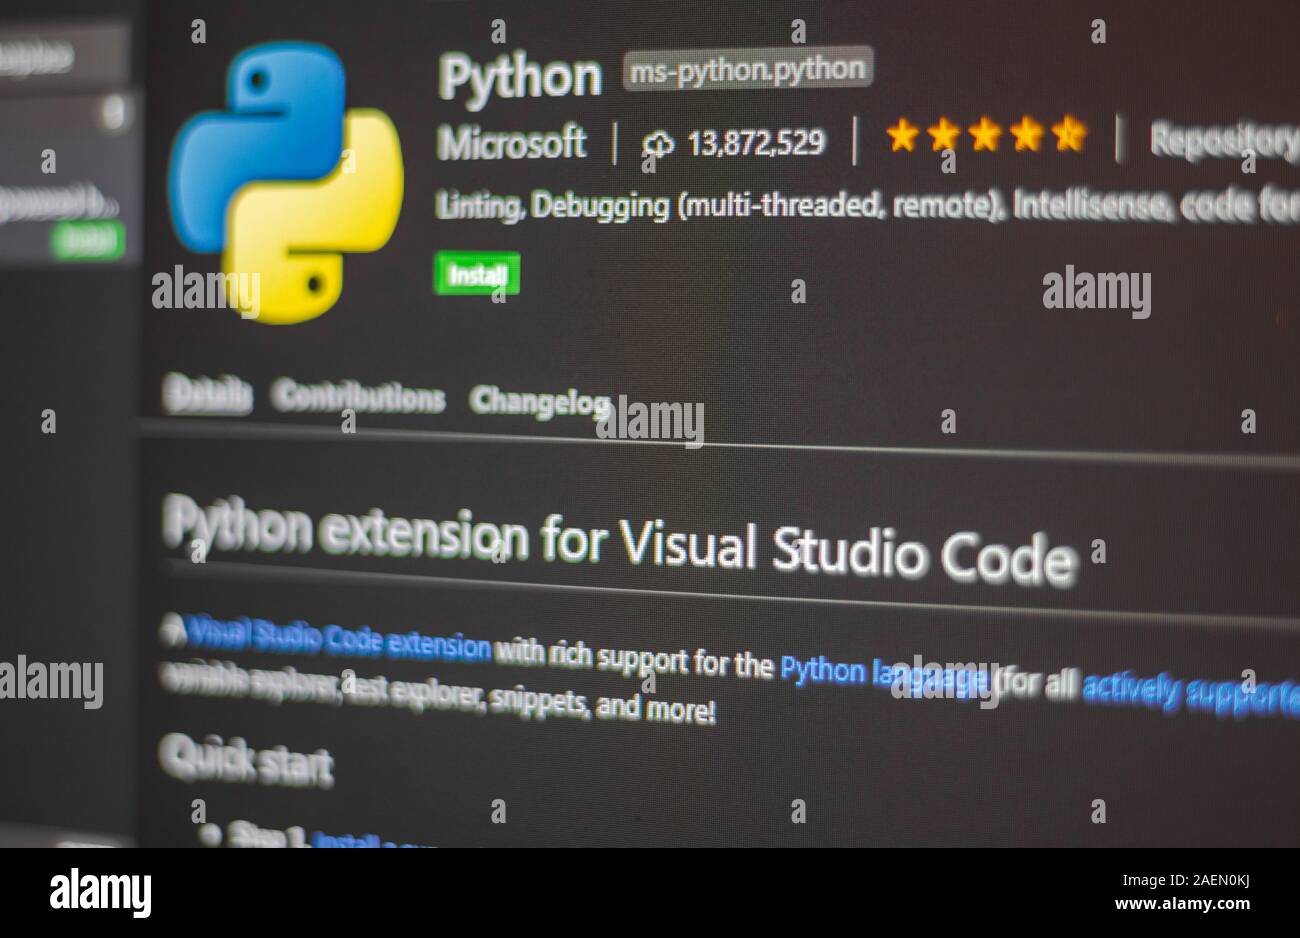 linting python in visual studio code